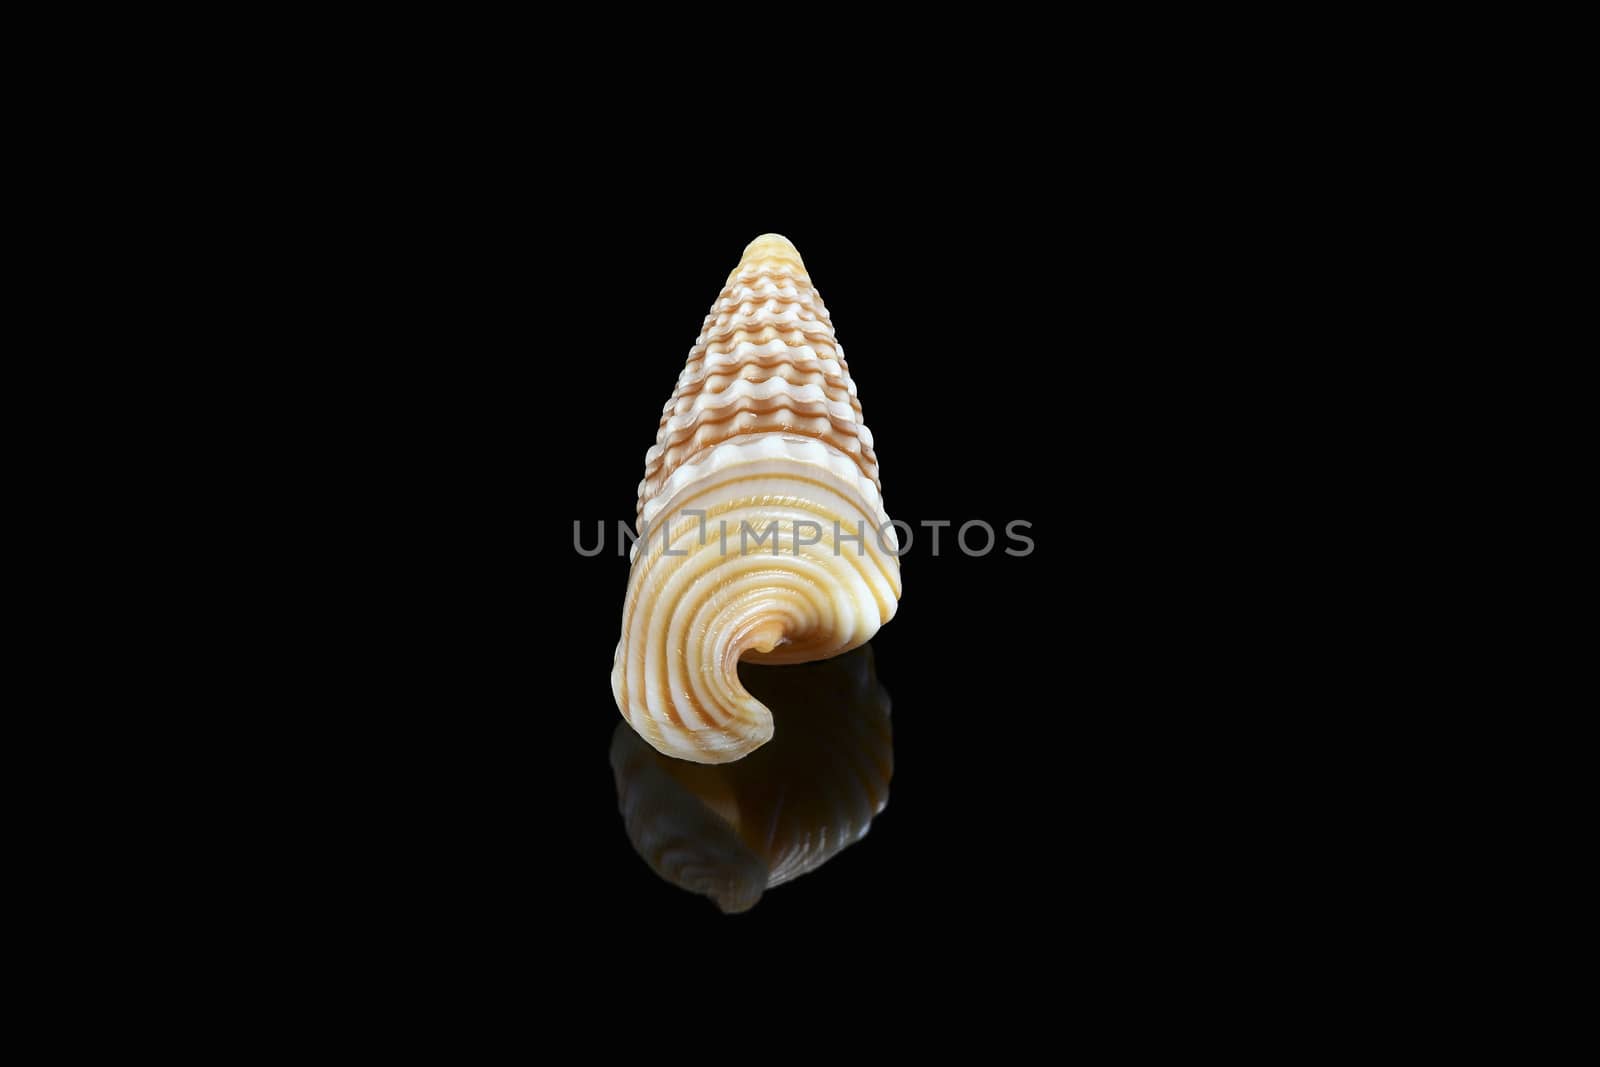 Girdled horn snail (Cerithidea (Cerithideopsilla) cingulata) on black background, Dubai, United Arab Emirates. L2,4xW1x0,75cm